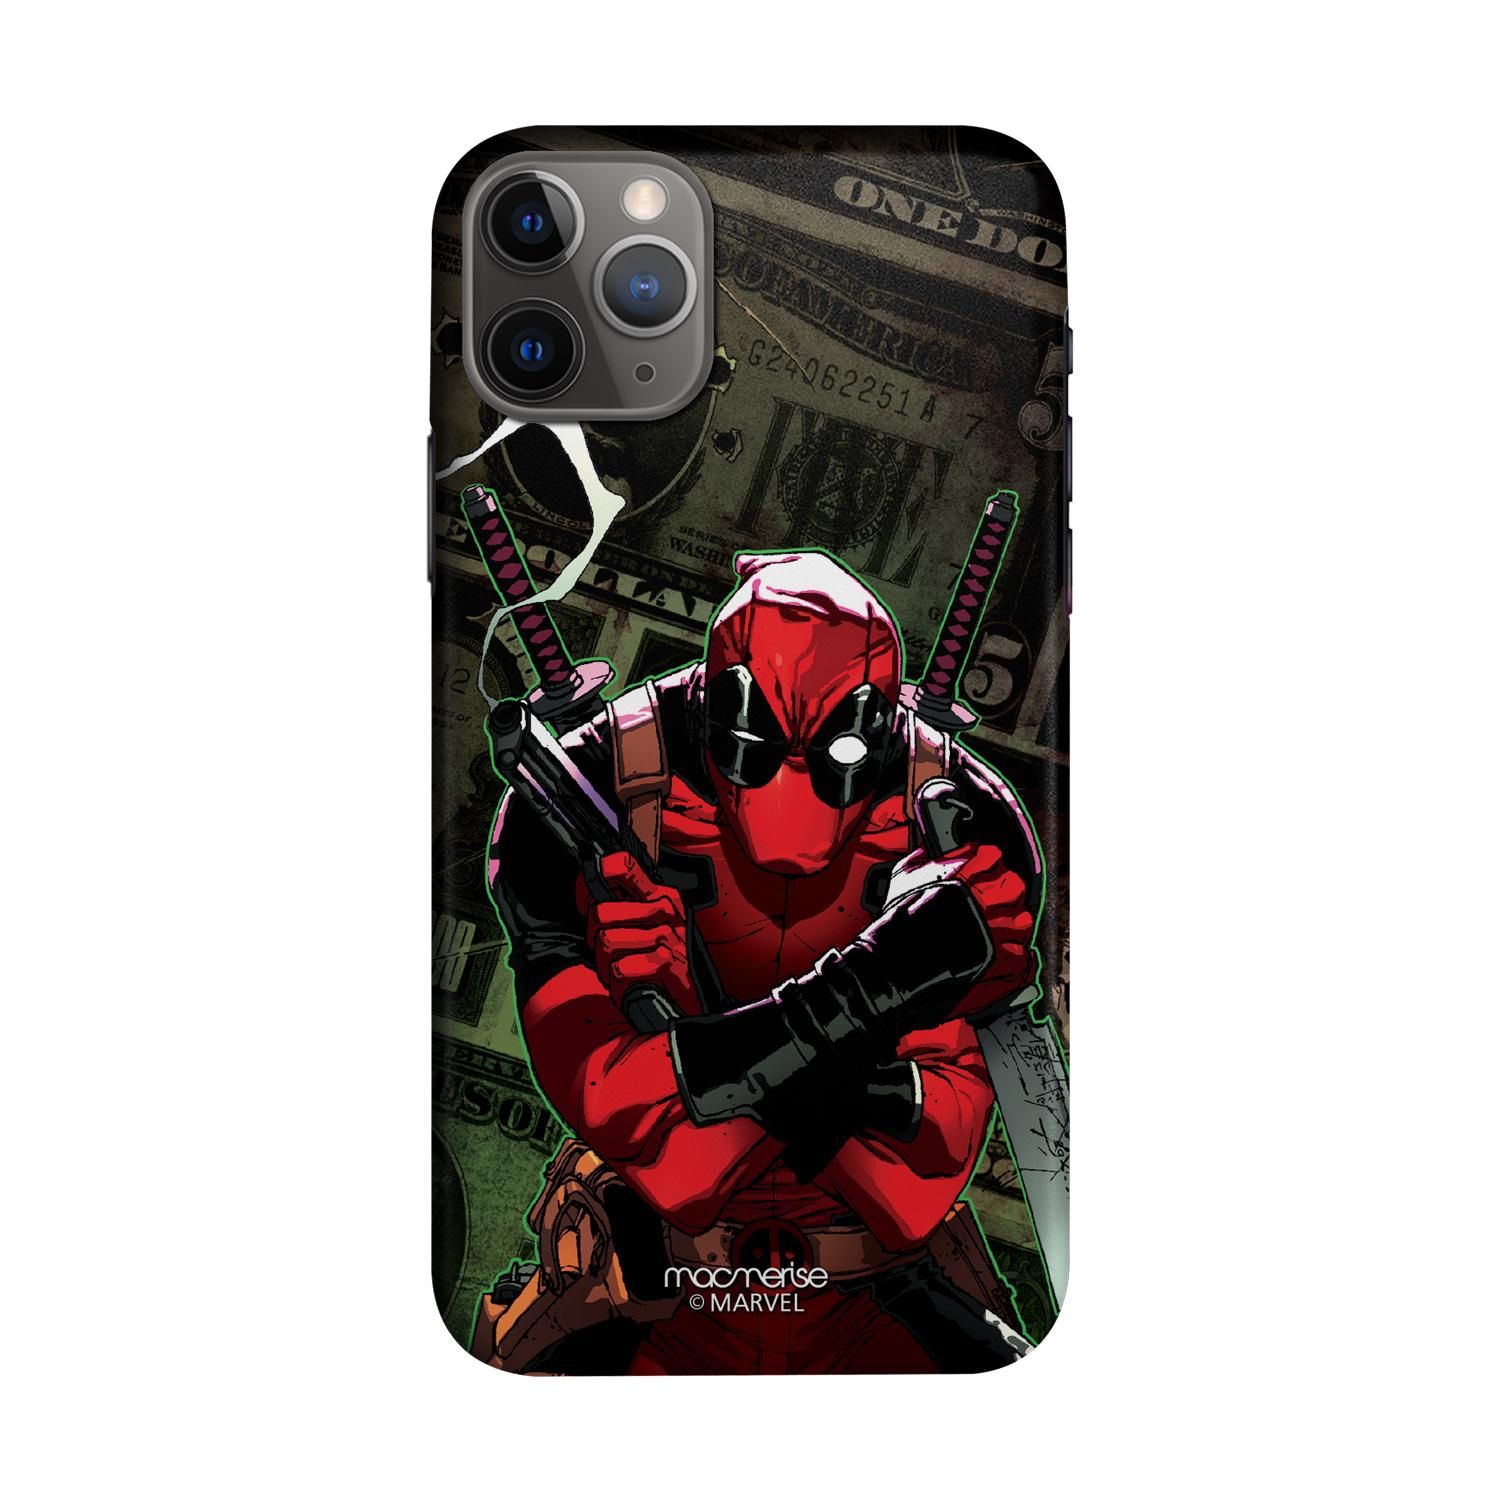 Buy Deadpool Dollar - Sleek Phone Case for iPhone 11 Pro Max Online